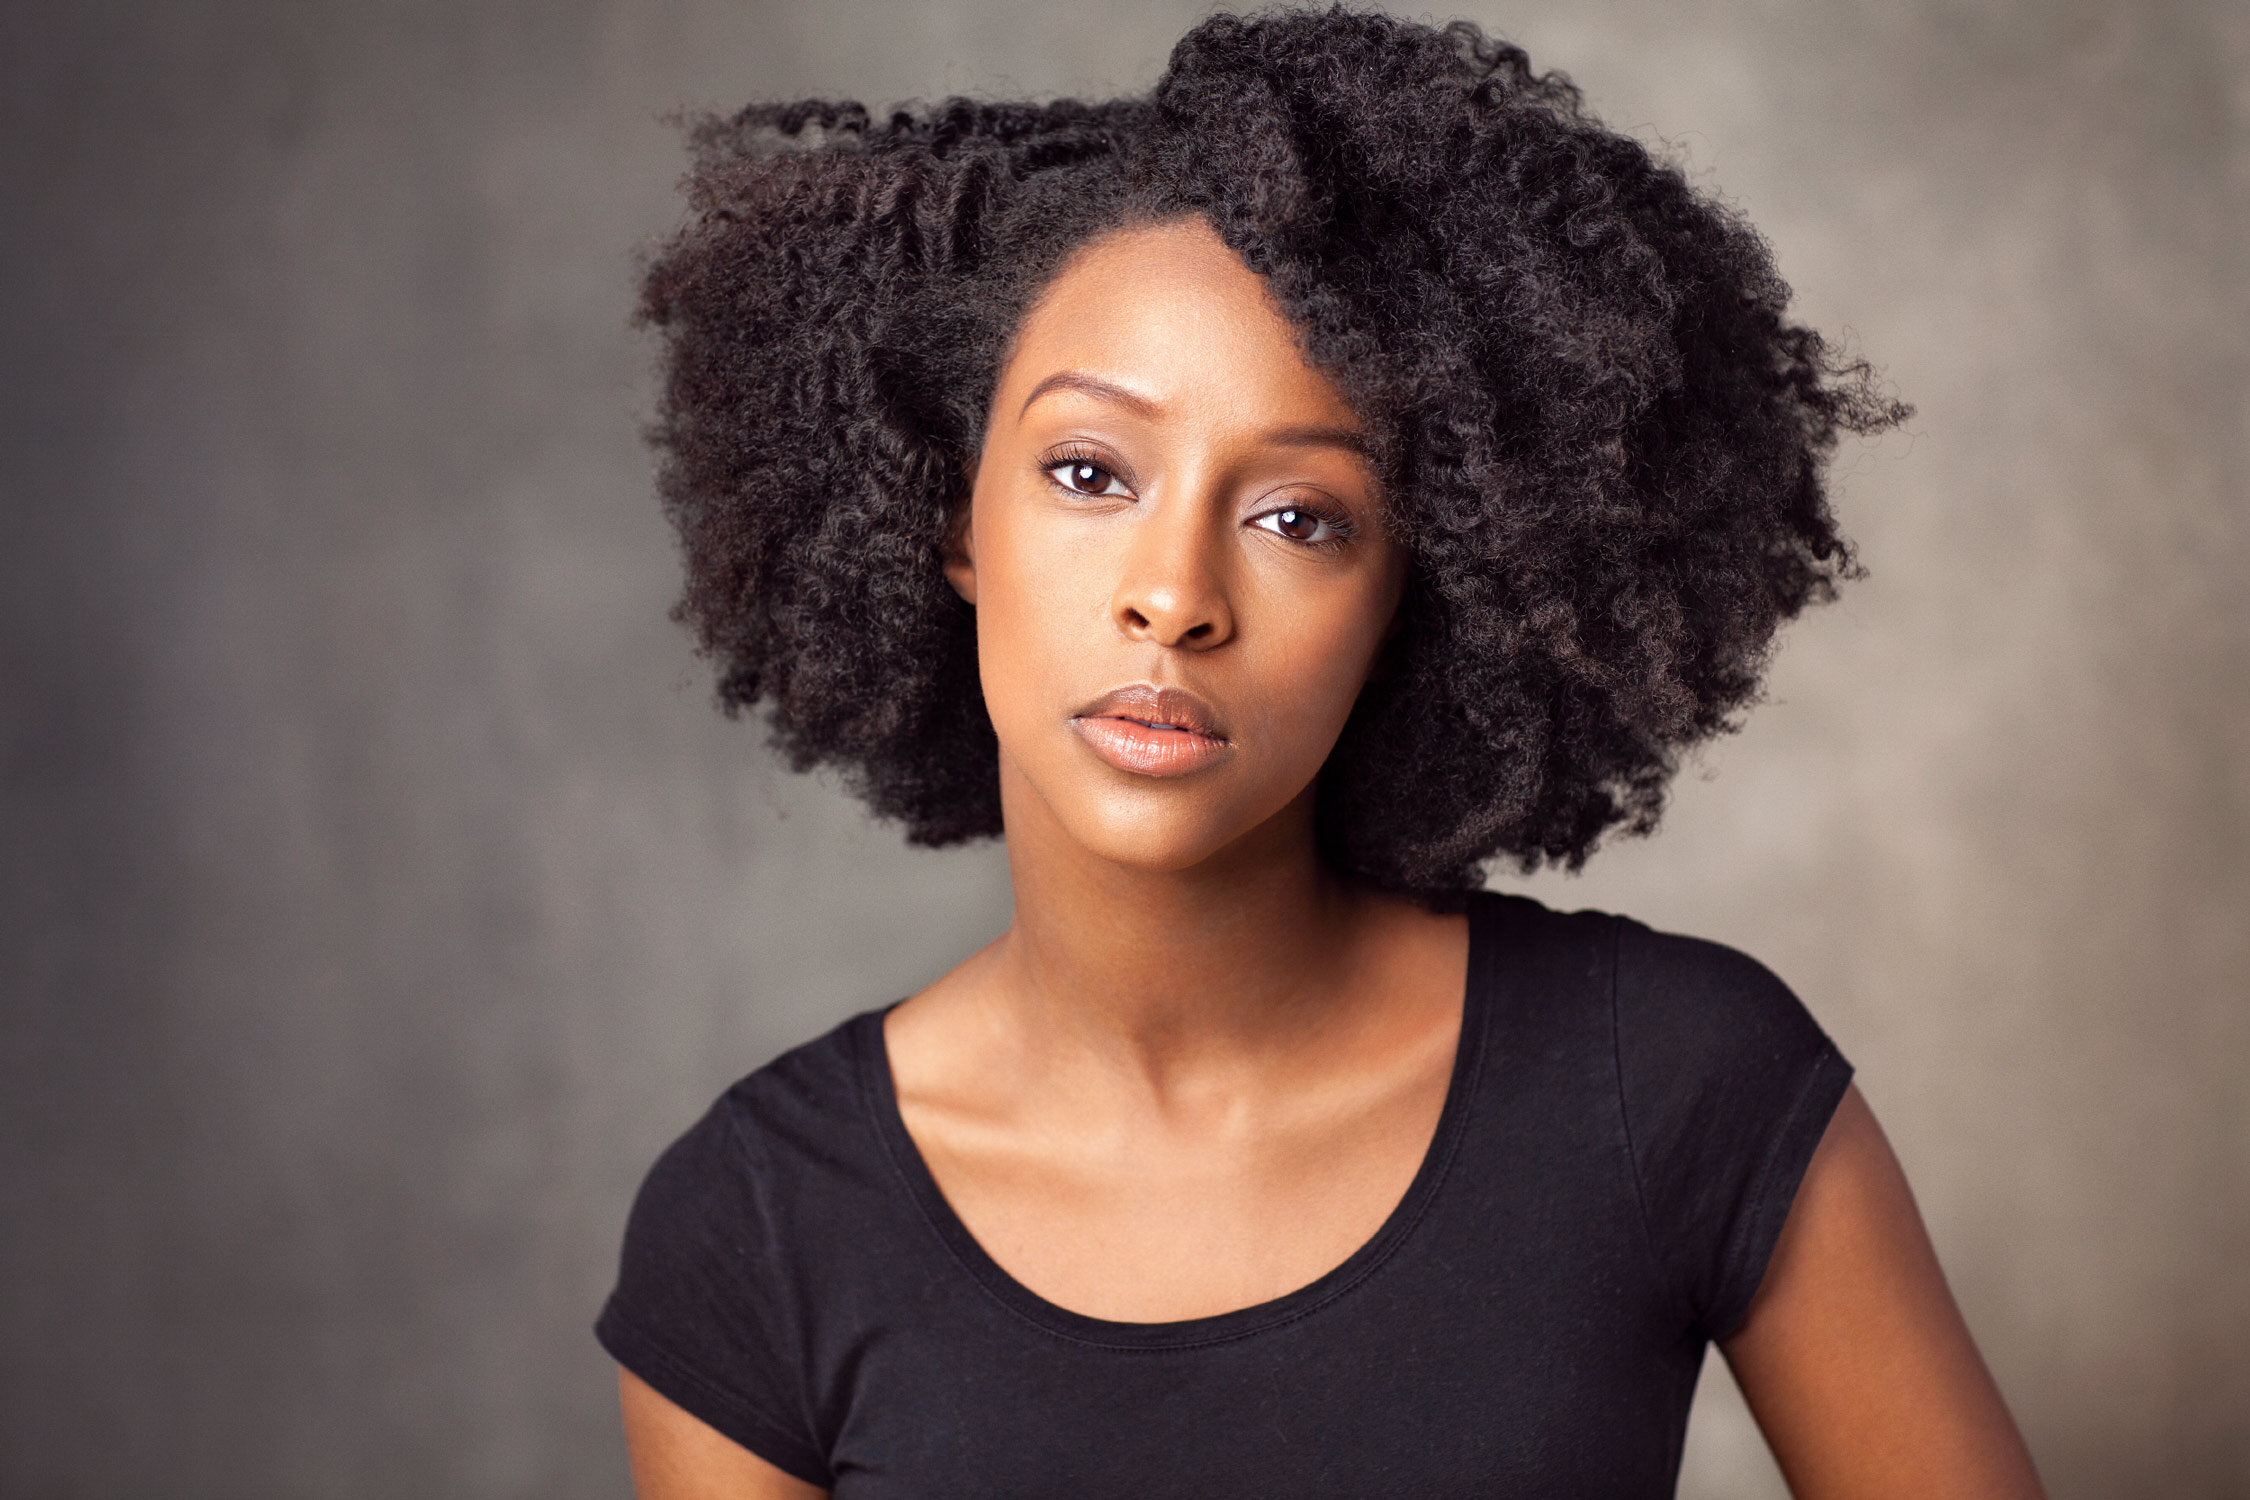 Ebony-Obsidian-African-american-actress-headshots-015-b.jpg